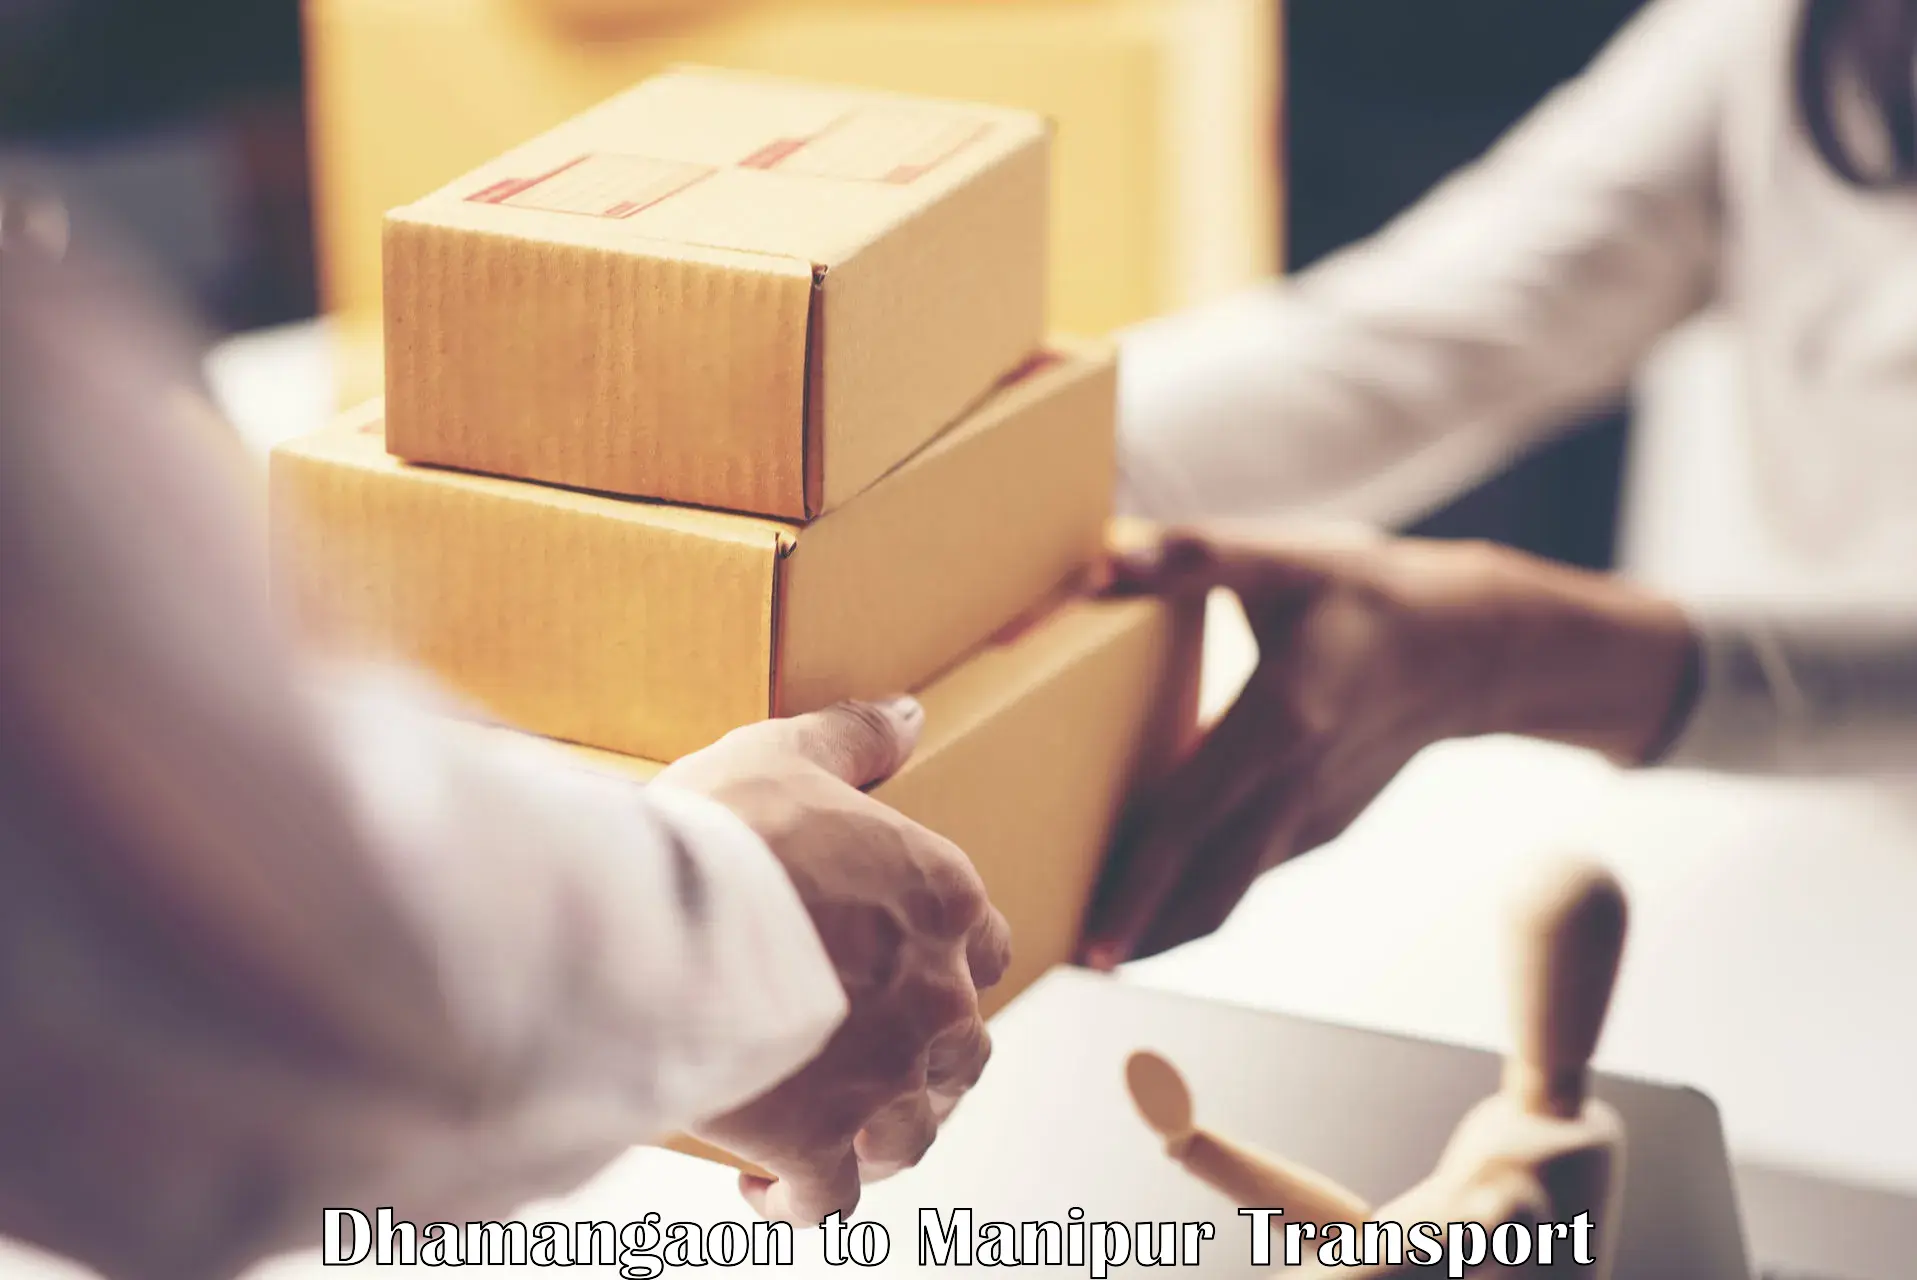 Shipping partner Dhamangaon to Manipur